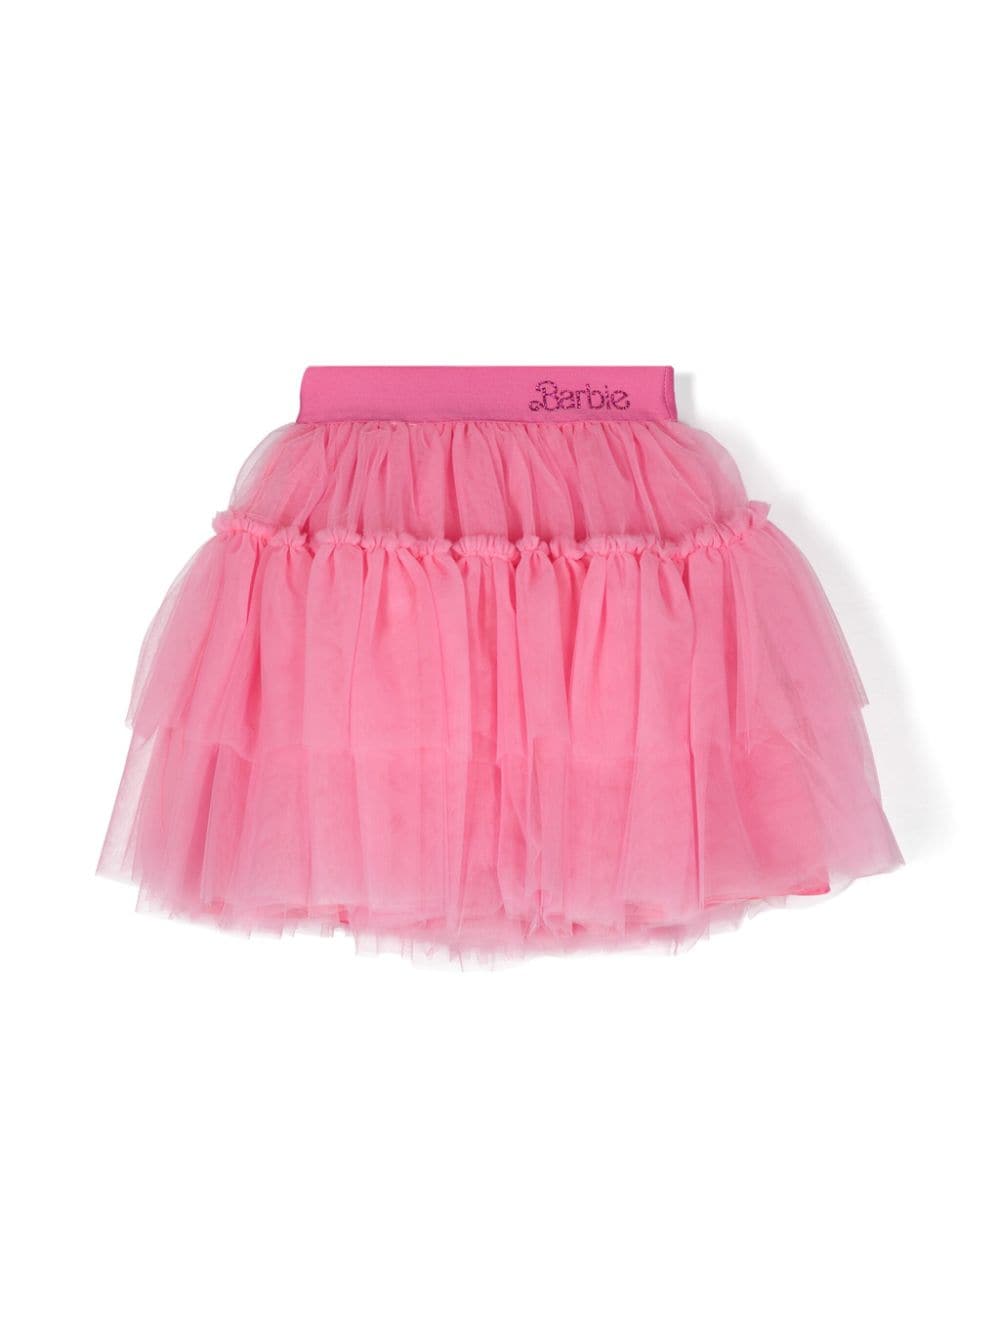 Monnalisa x Barbie tulle skirt - Pink von Monnalisa